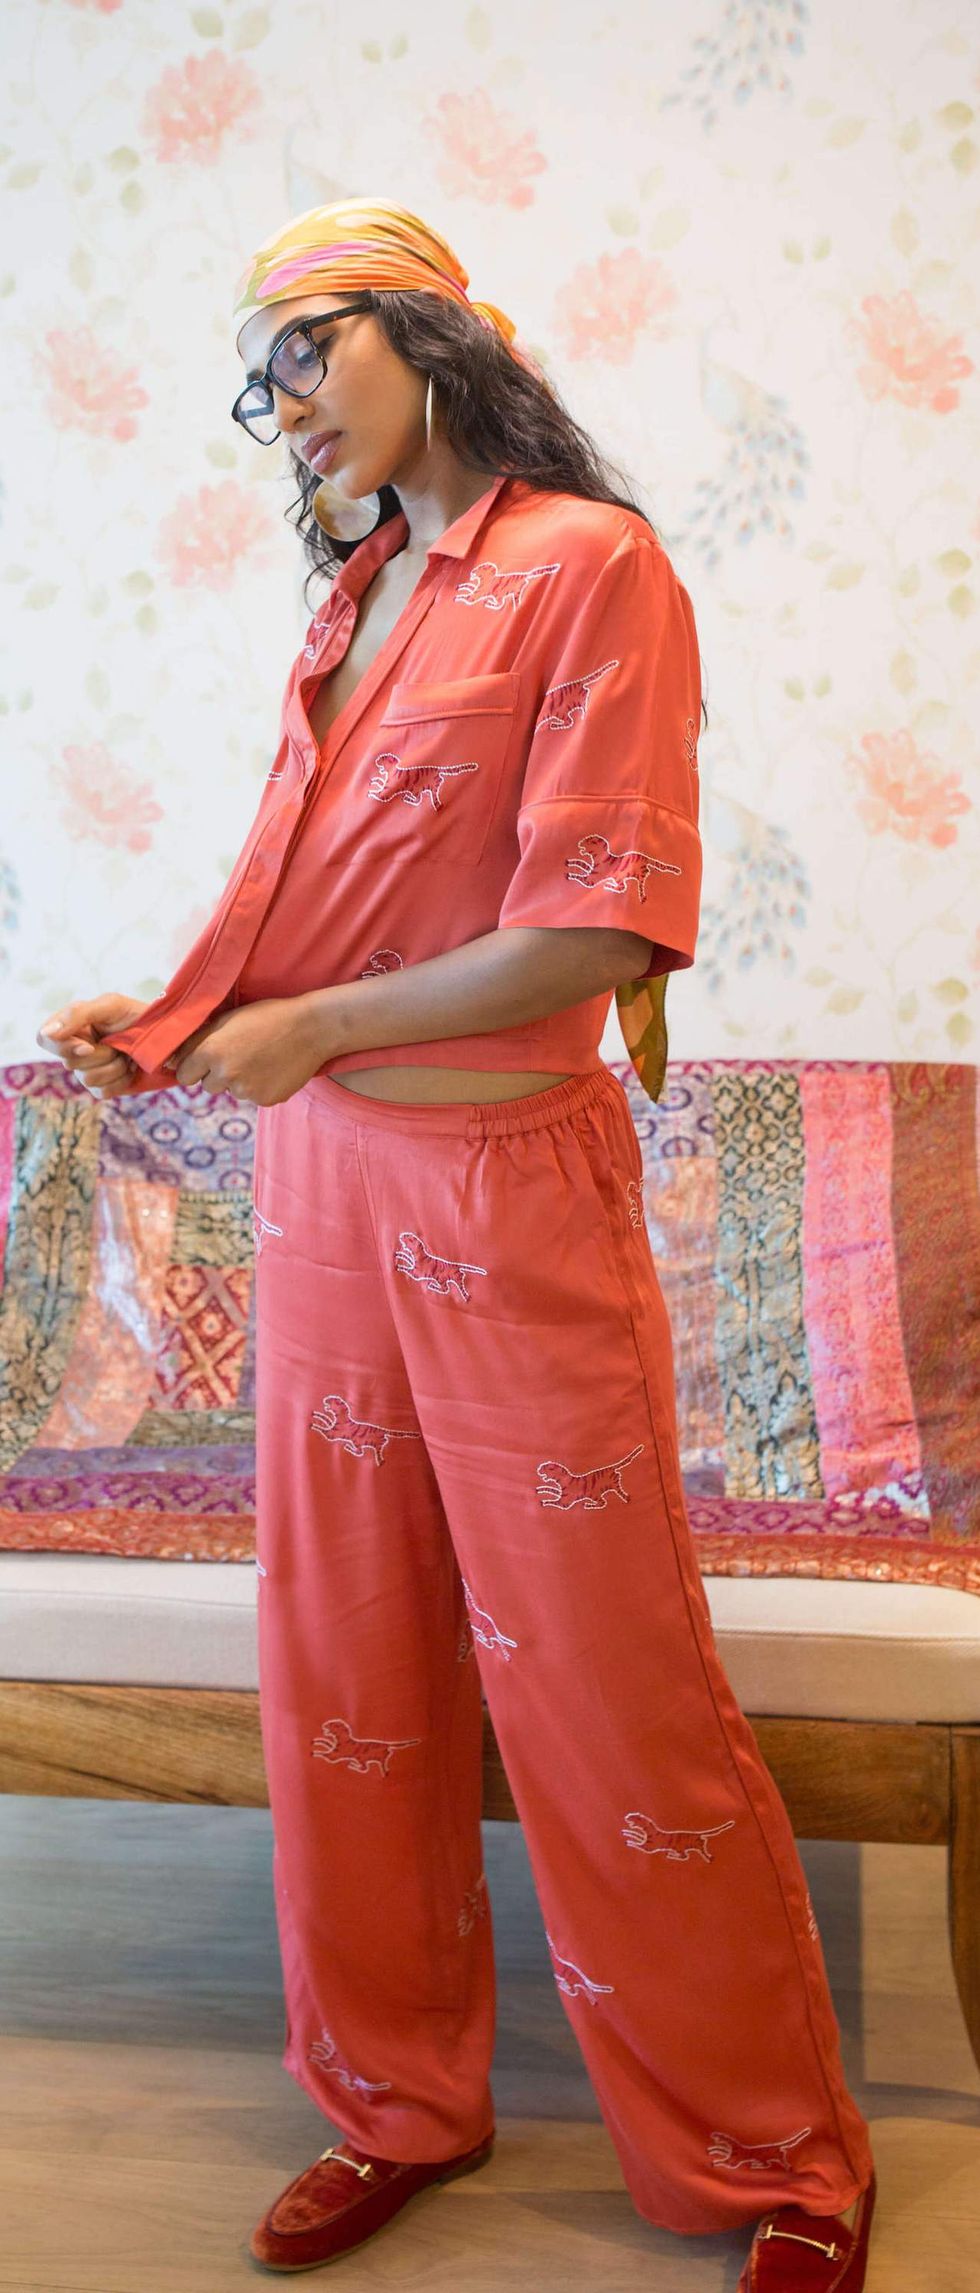 WDIRARA Men's Satin Sleepwear Plaid Button Long Sleeve Shirt and Pants Pajama Set